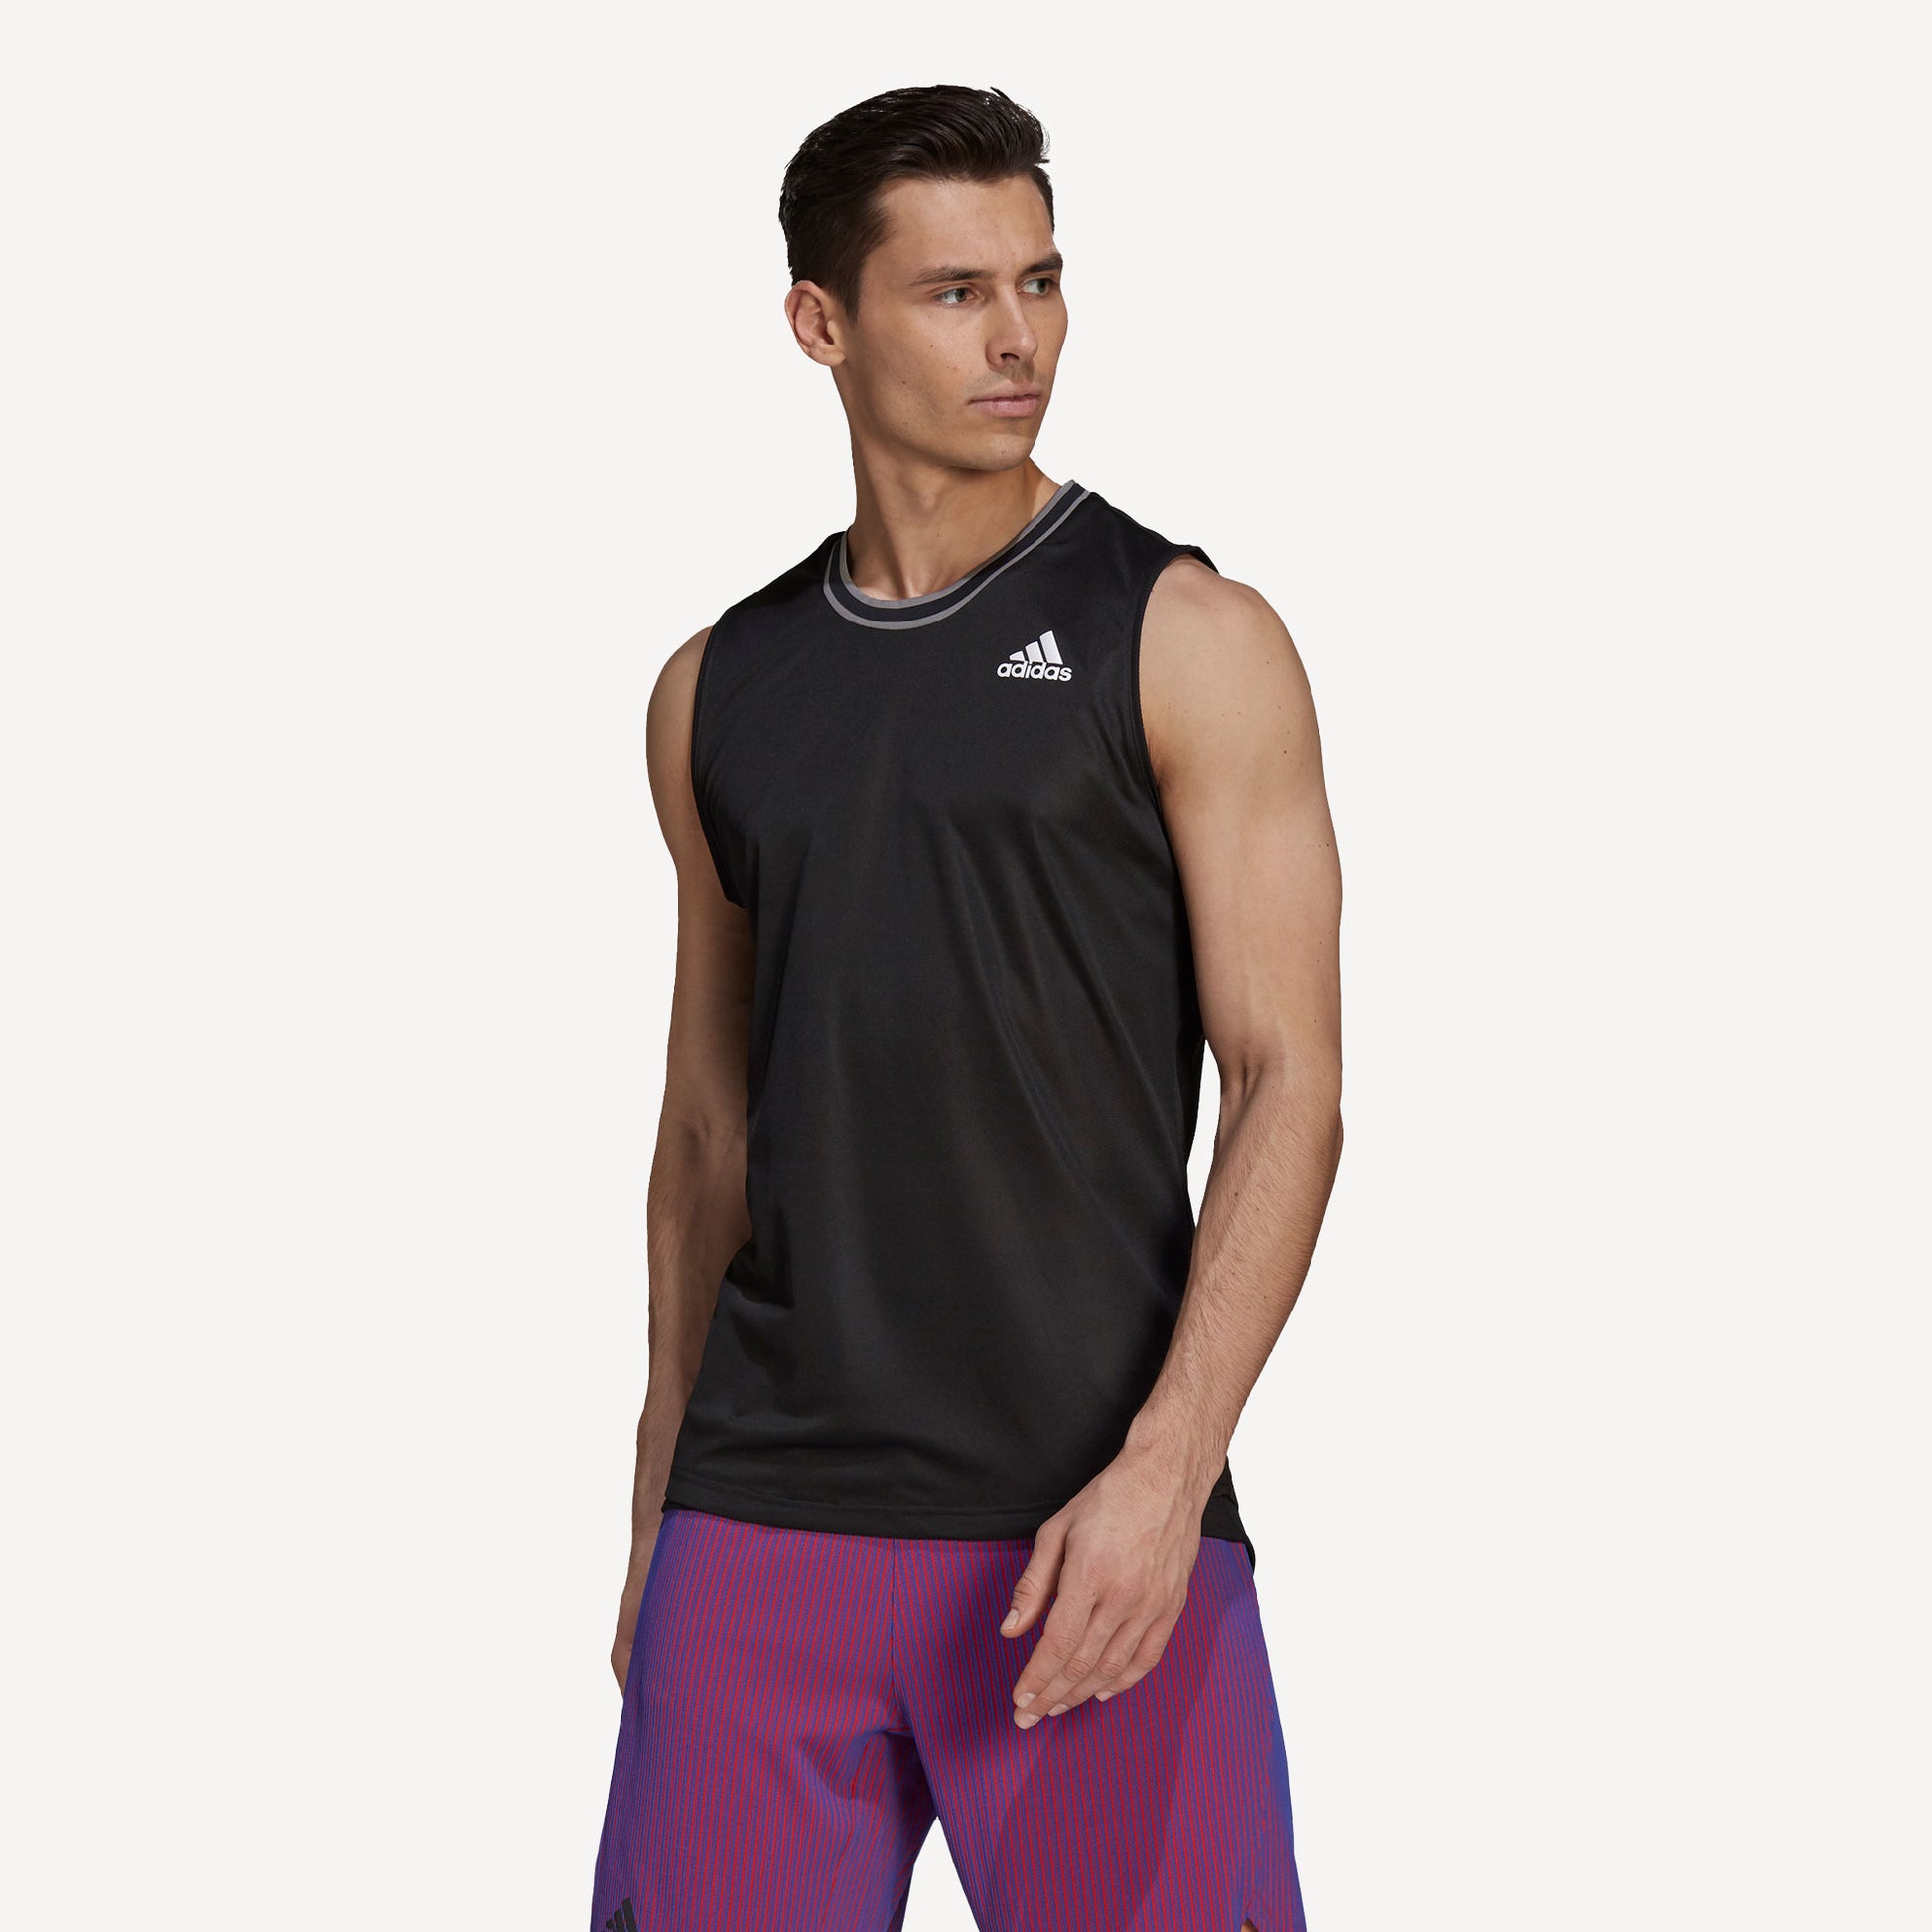 adidas Primeblue Men's Sleeveless Tennis Shirt Black (1)